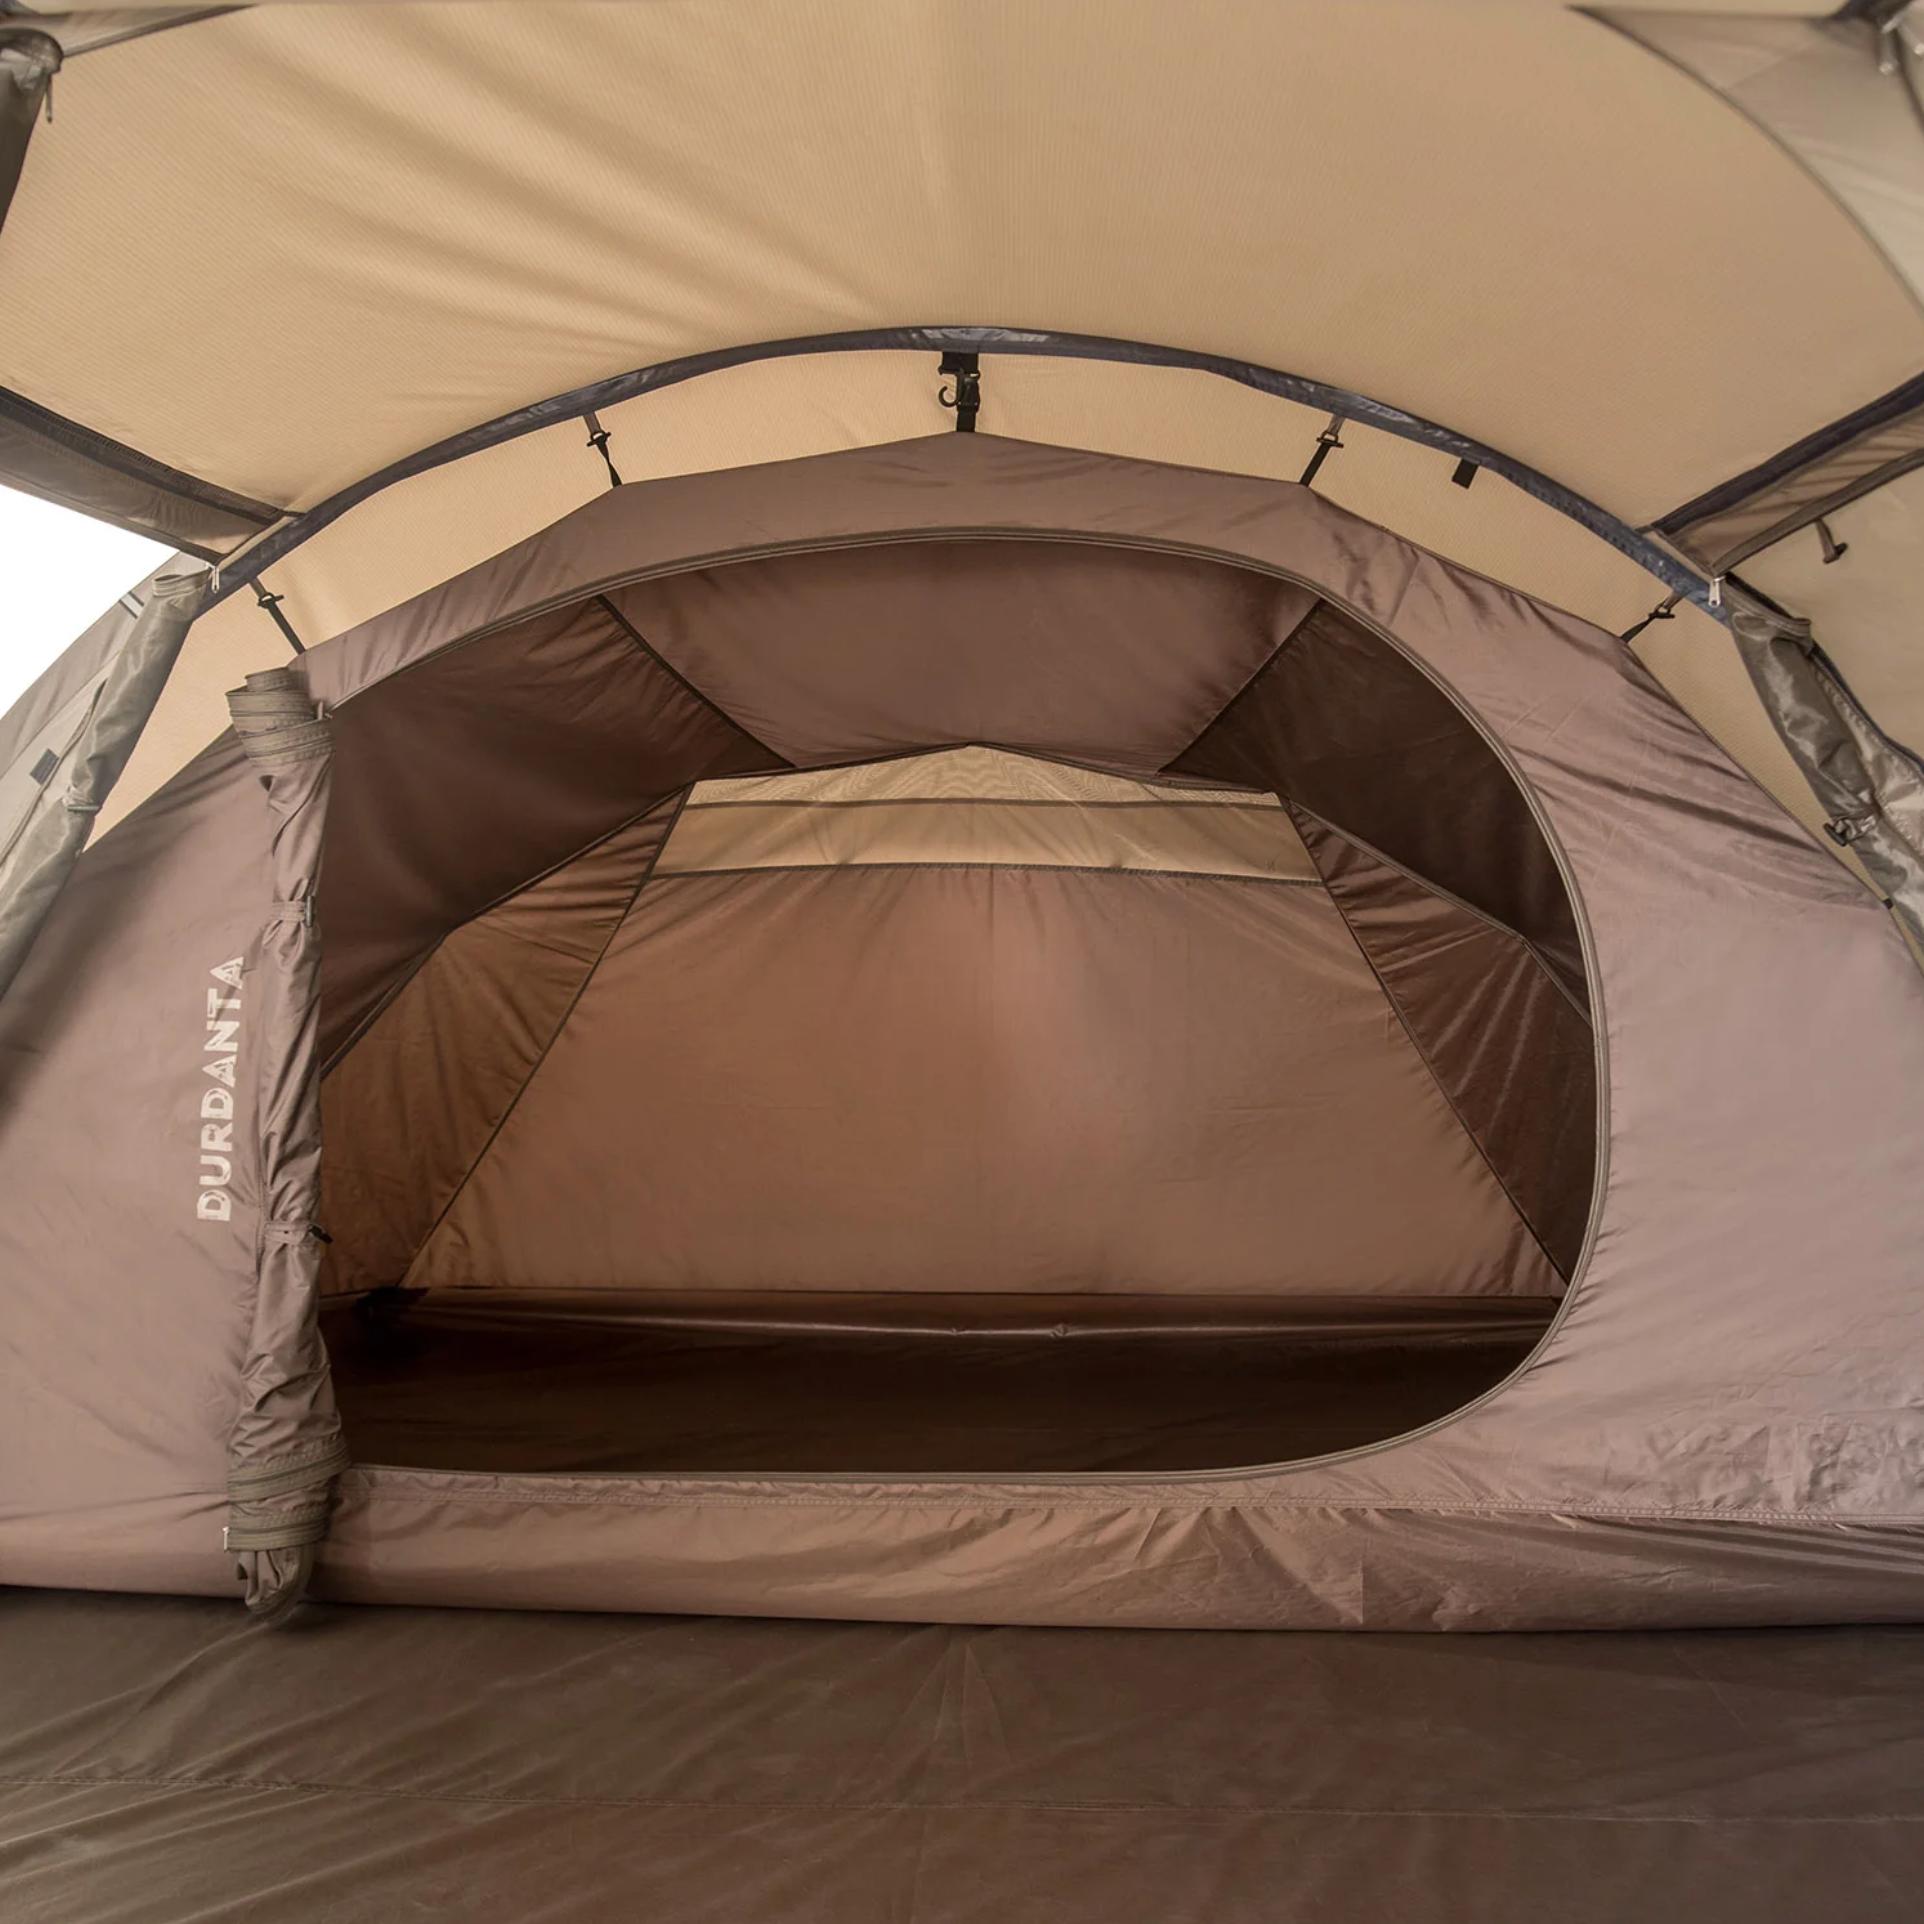 Tambu Durdanta - 4 Person Trekking Tunnel Tent Comfort